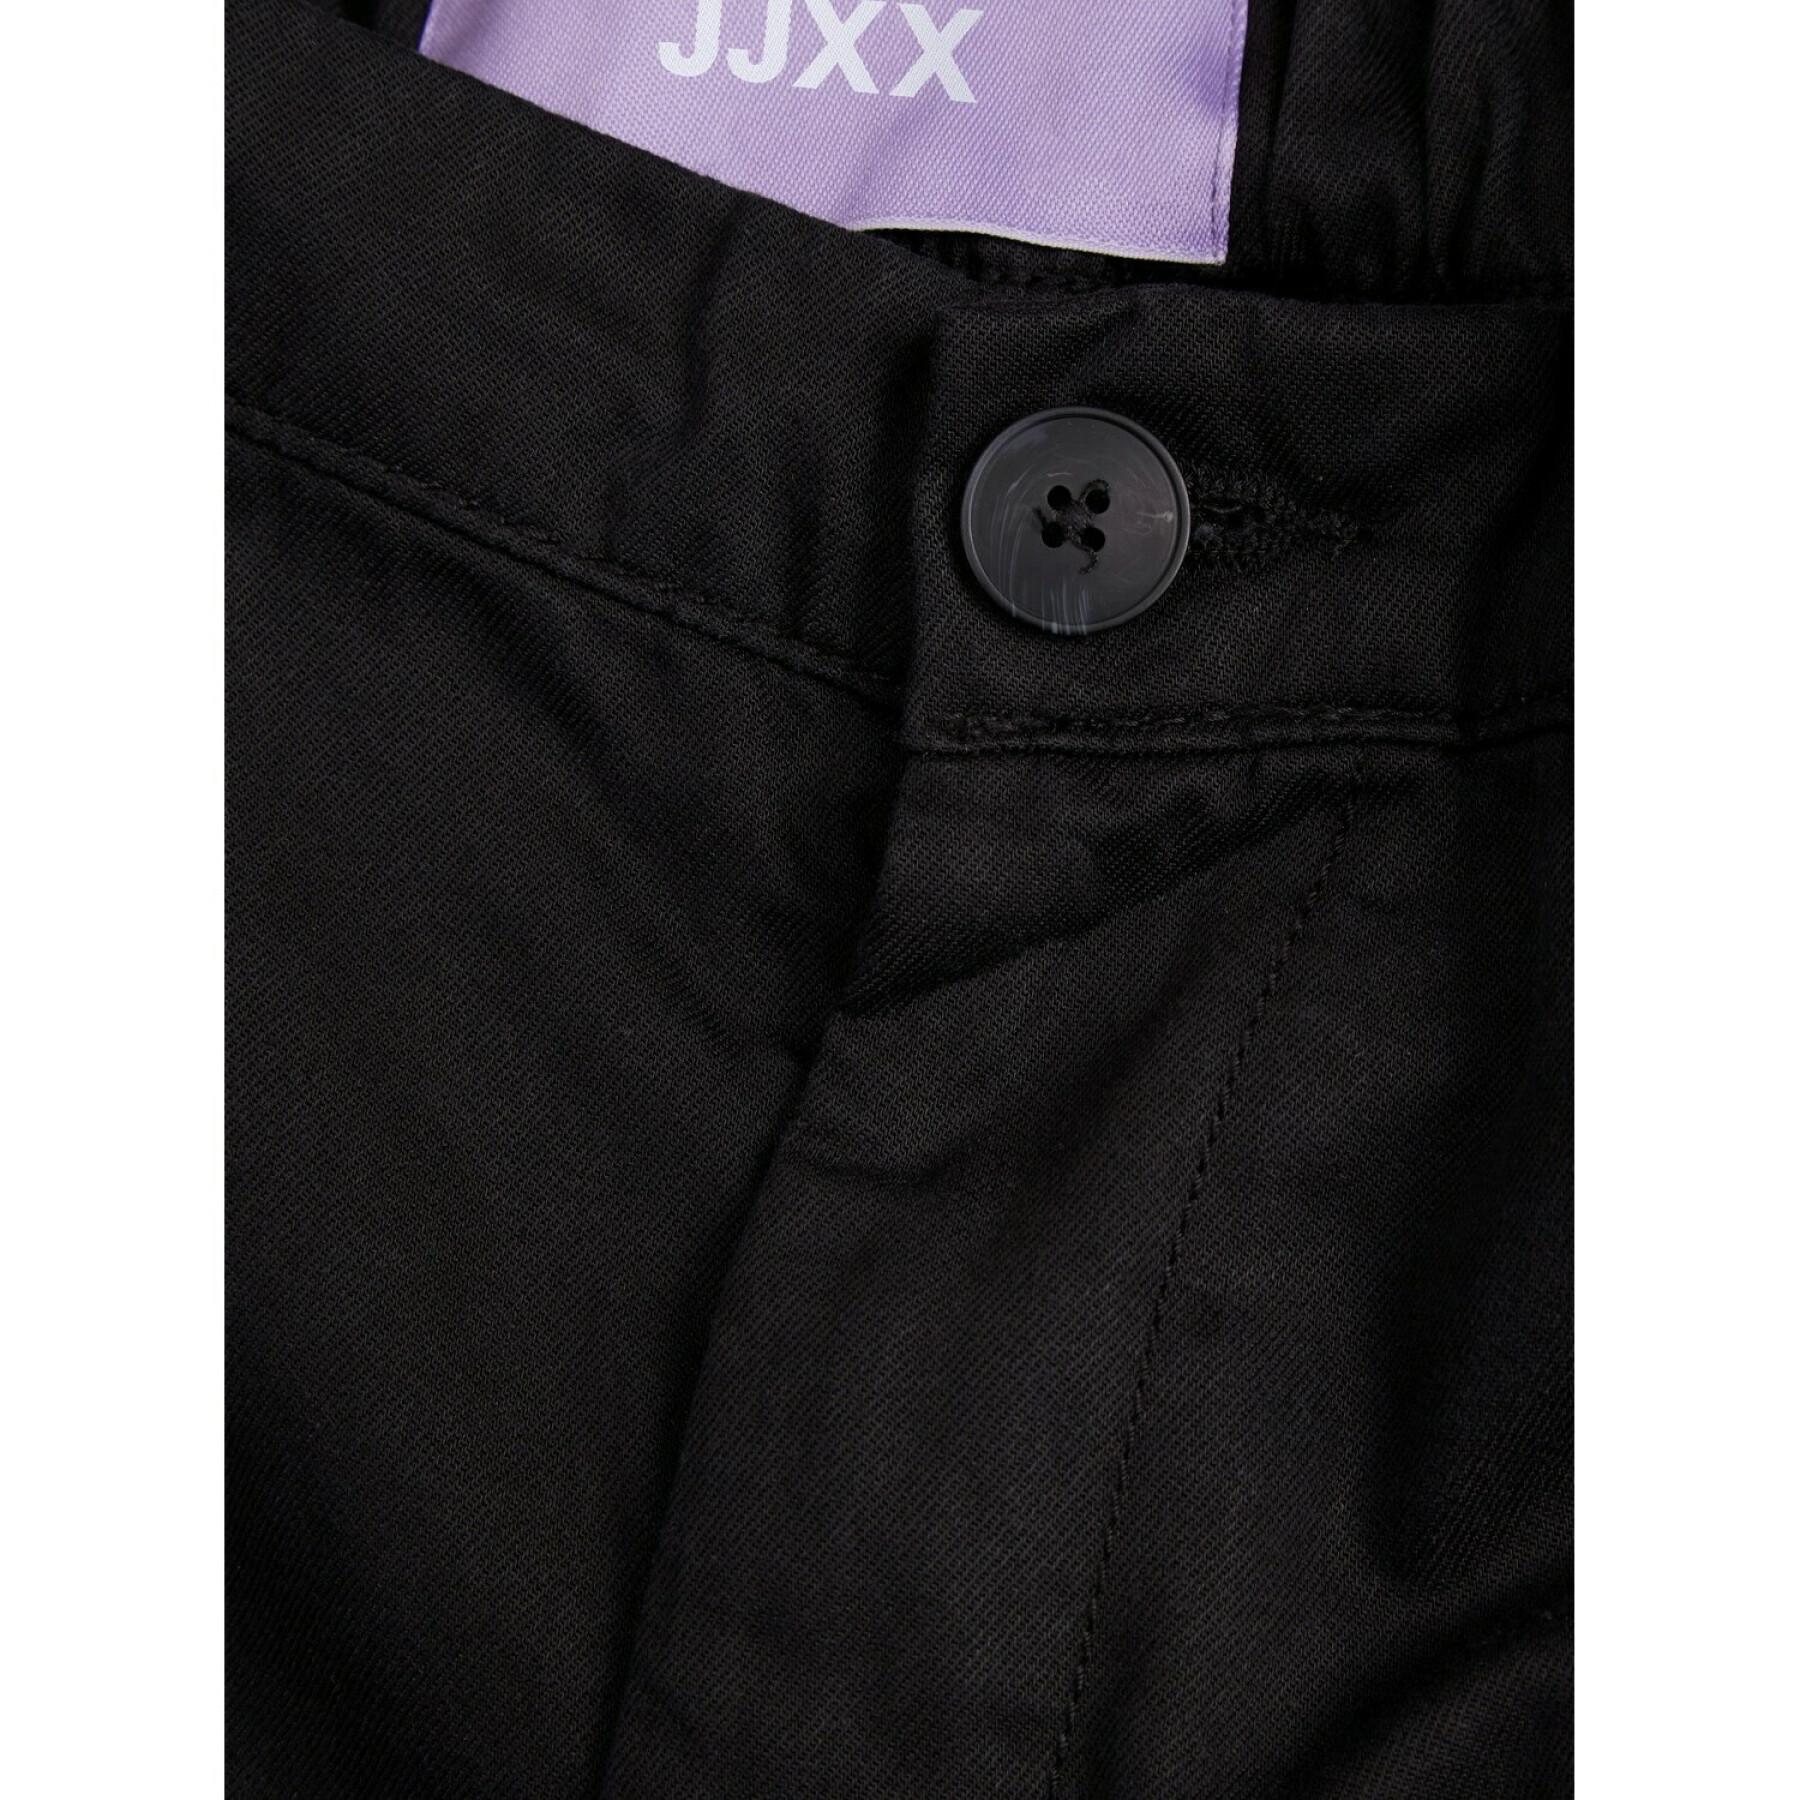 Women's cargo pants JJXX holly